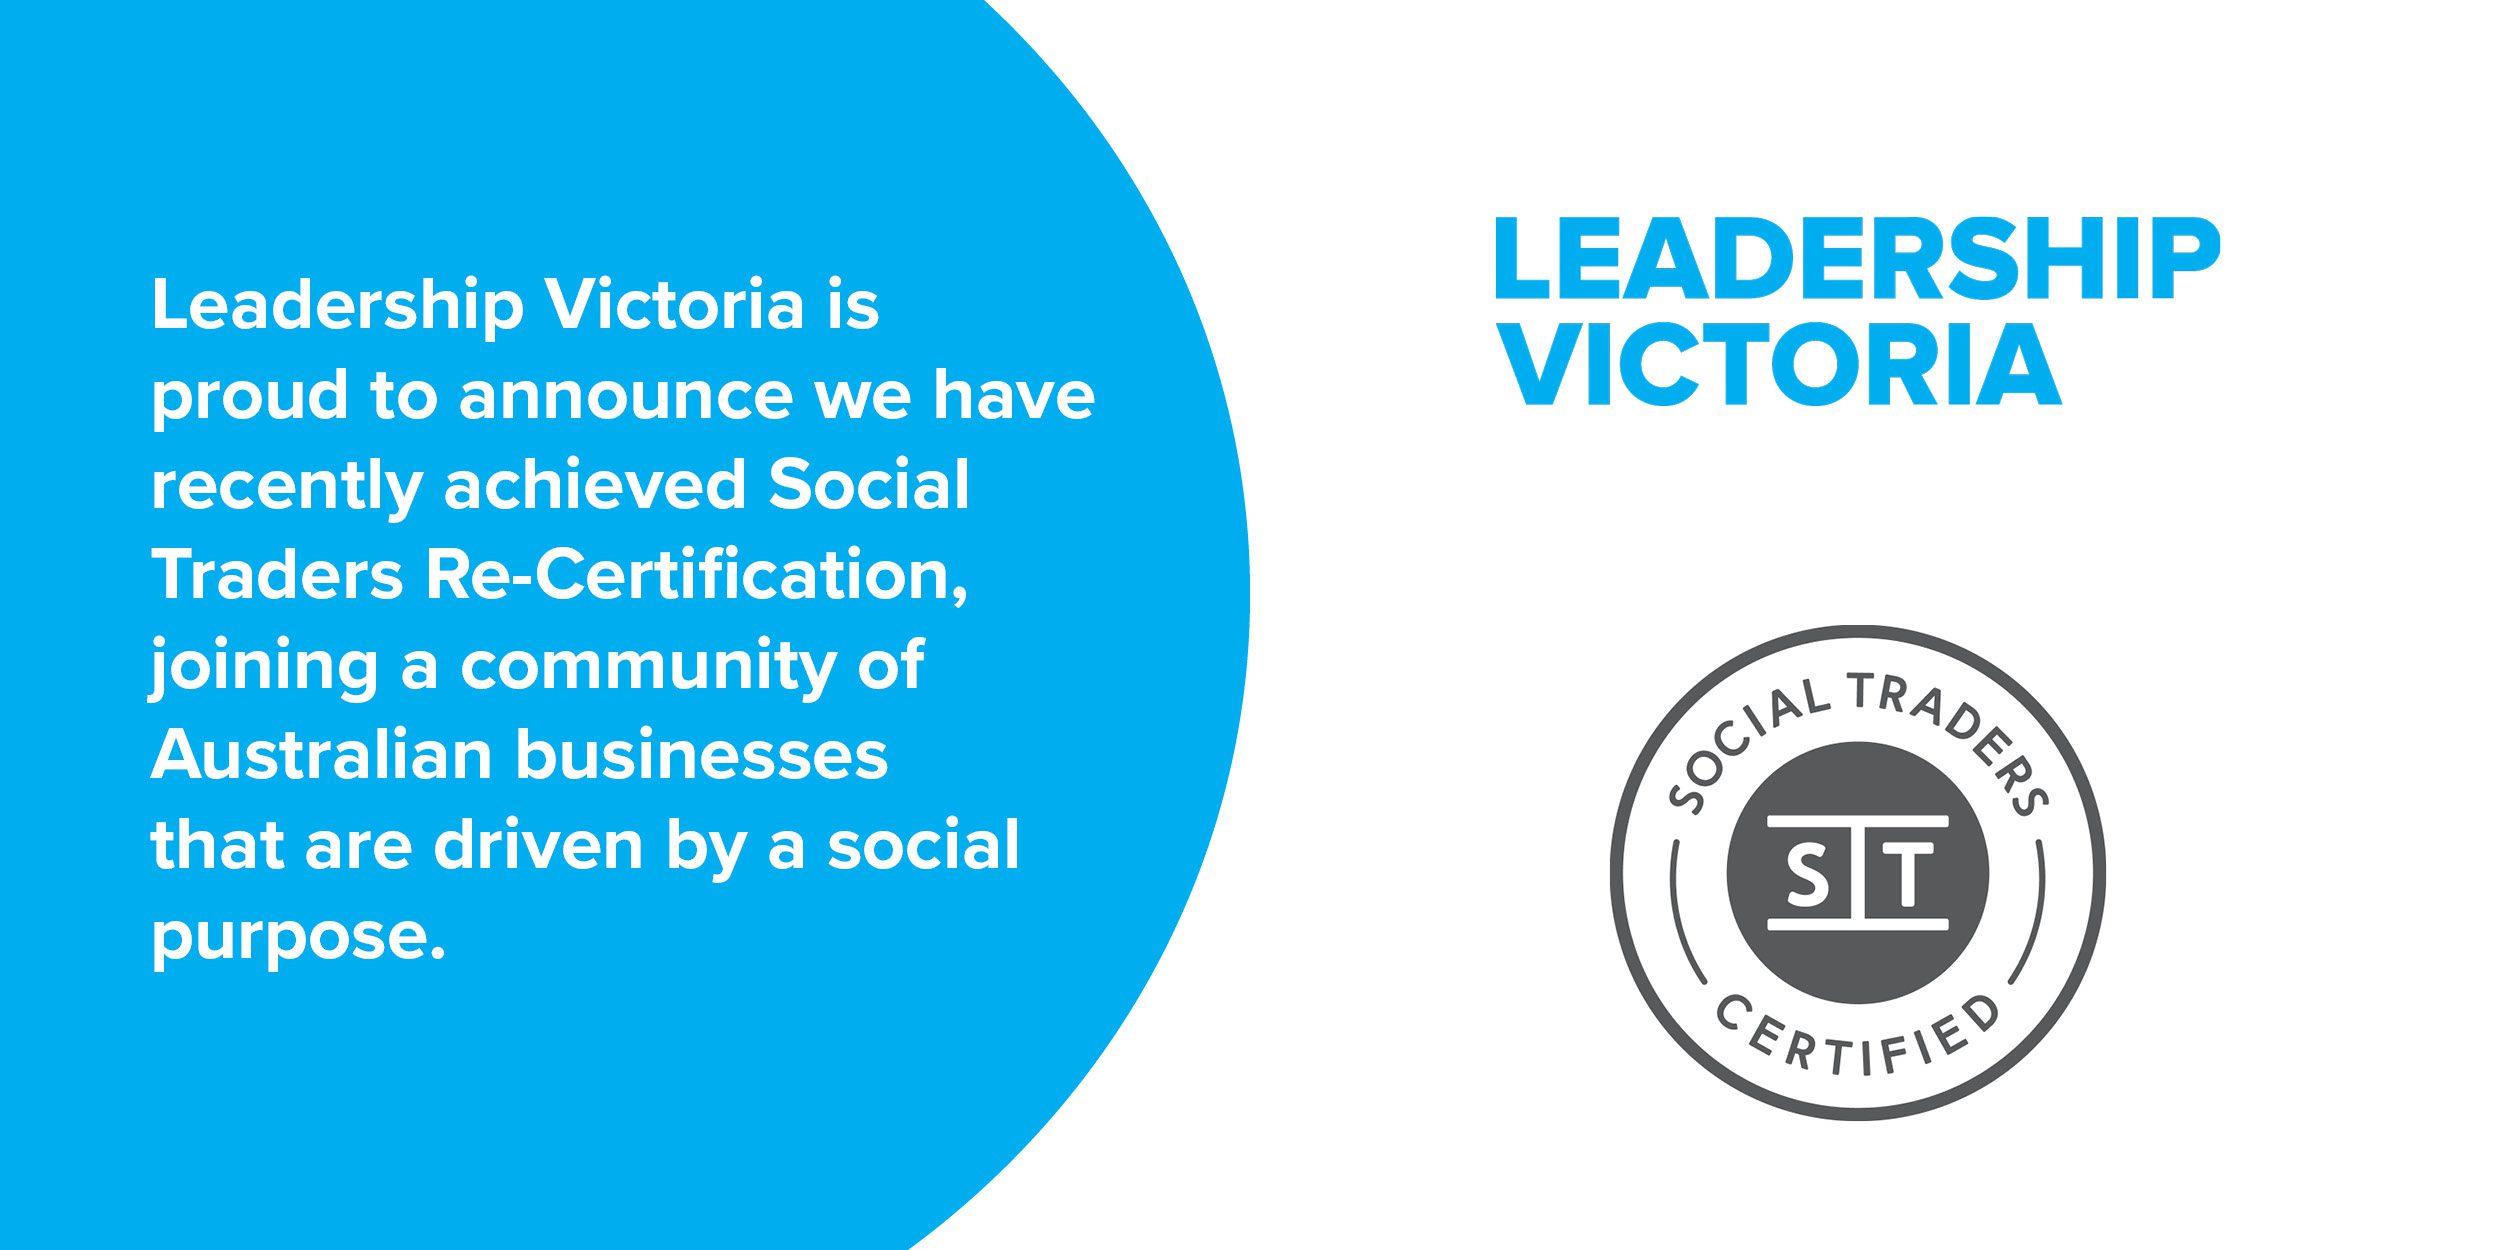 Leadership Victoria – A Certified Social Enterprise